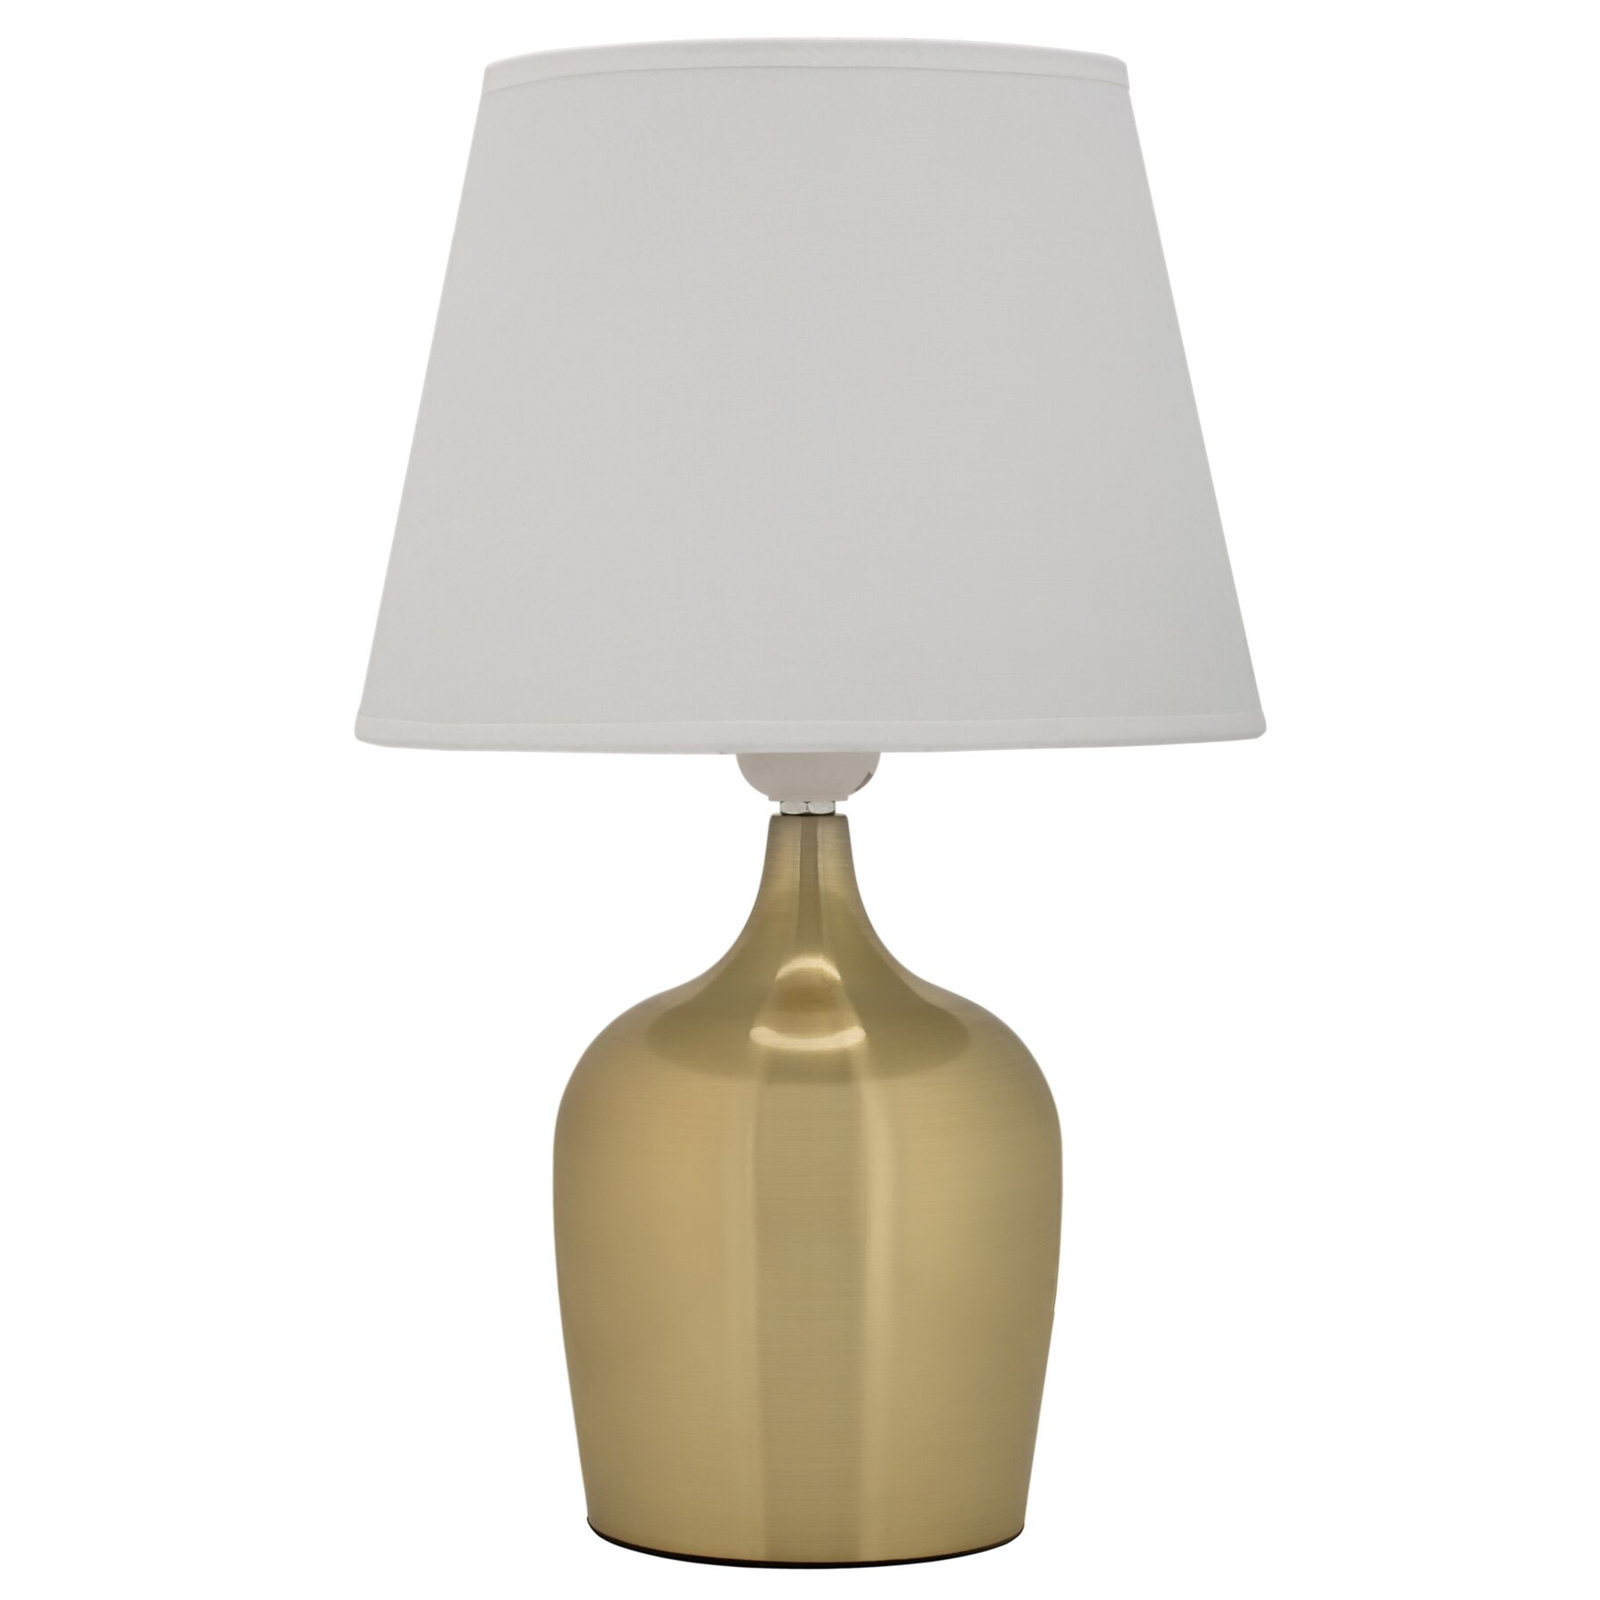 Pauleen Golden Glamour lampe à poser dorée/blanche